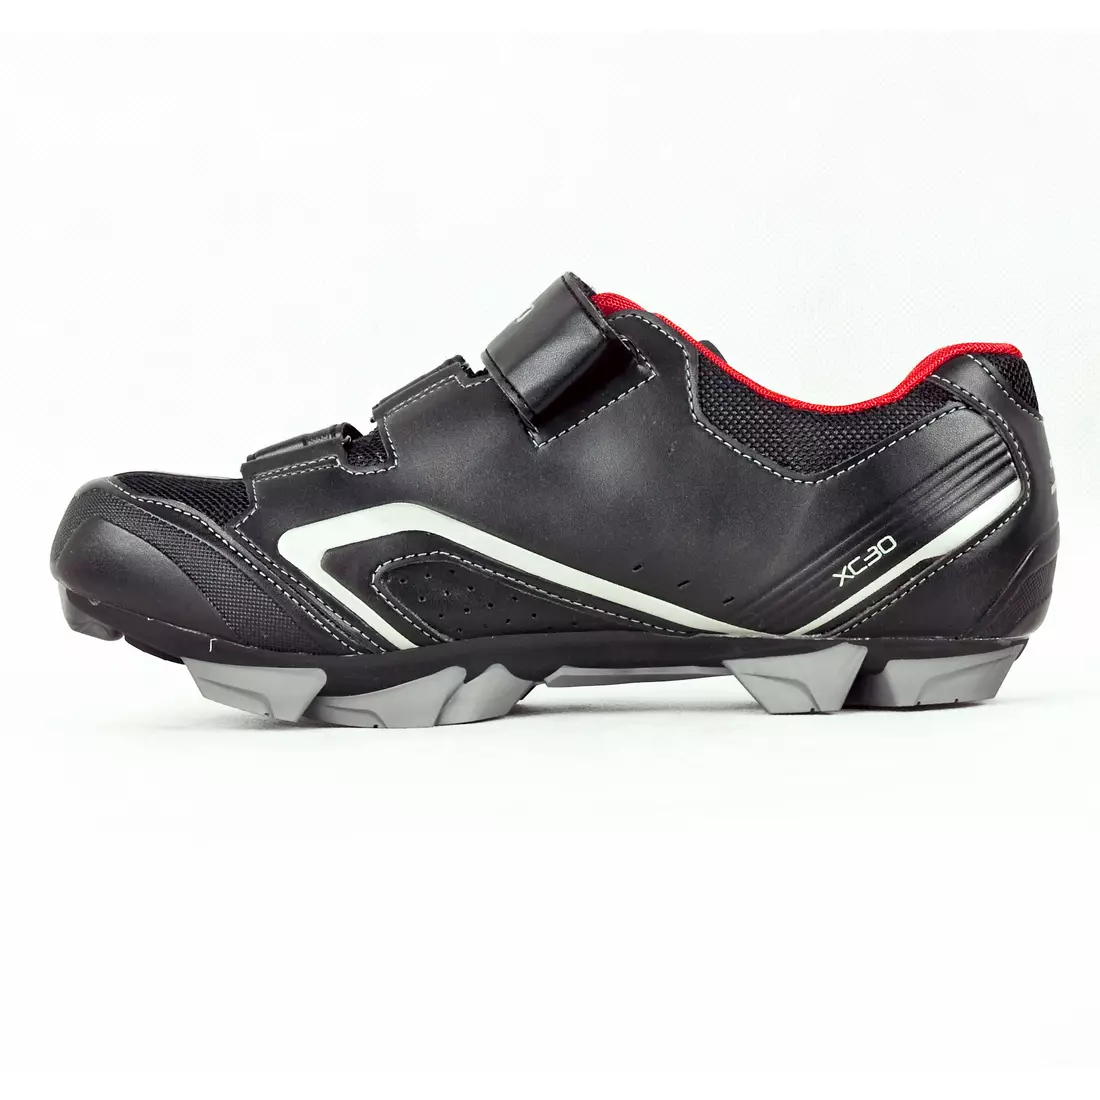 SHIMANO SH-XC30 L - MTB cycling shoes